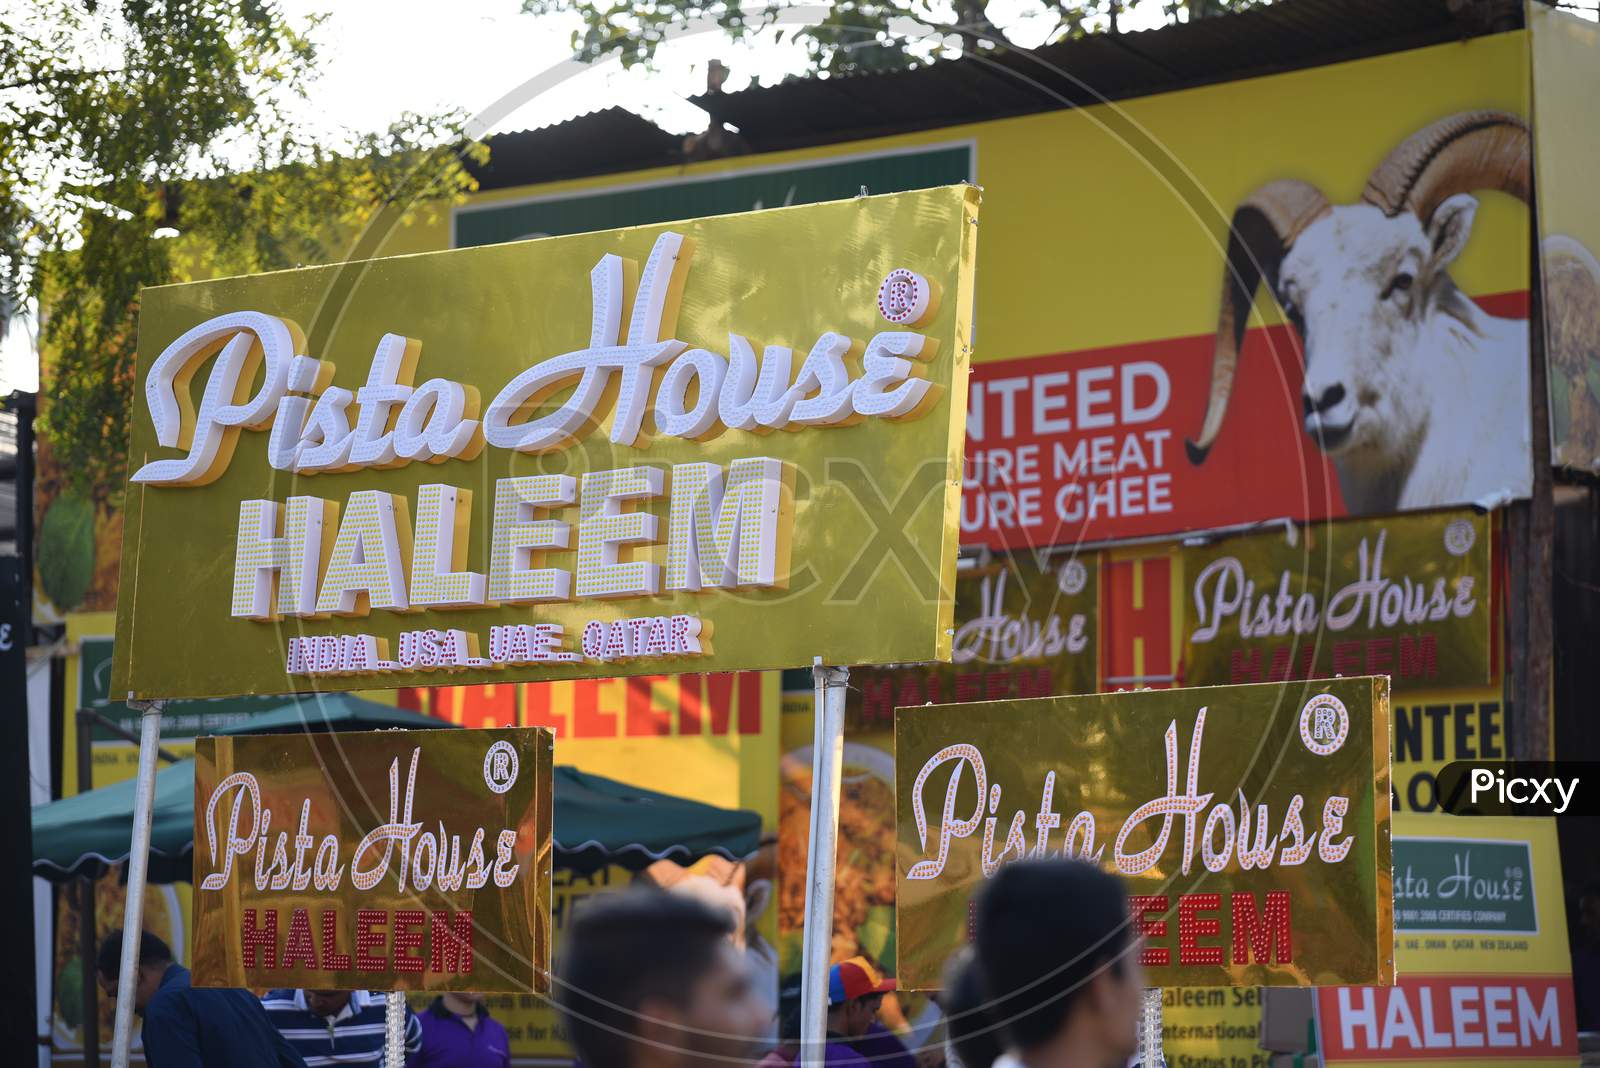 Pista House Haleem Name Board